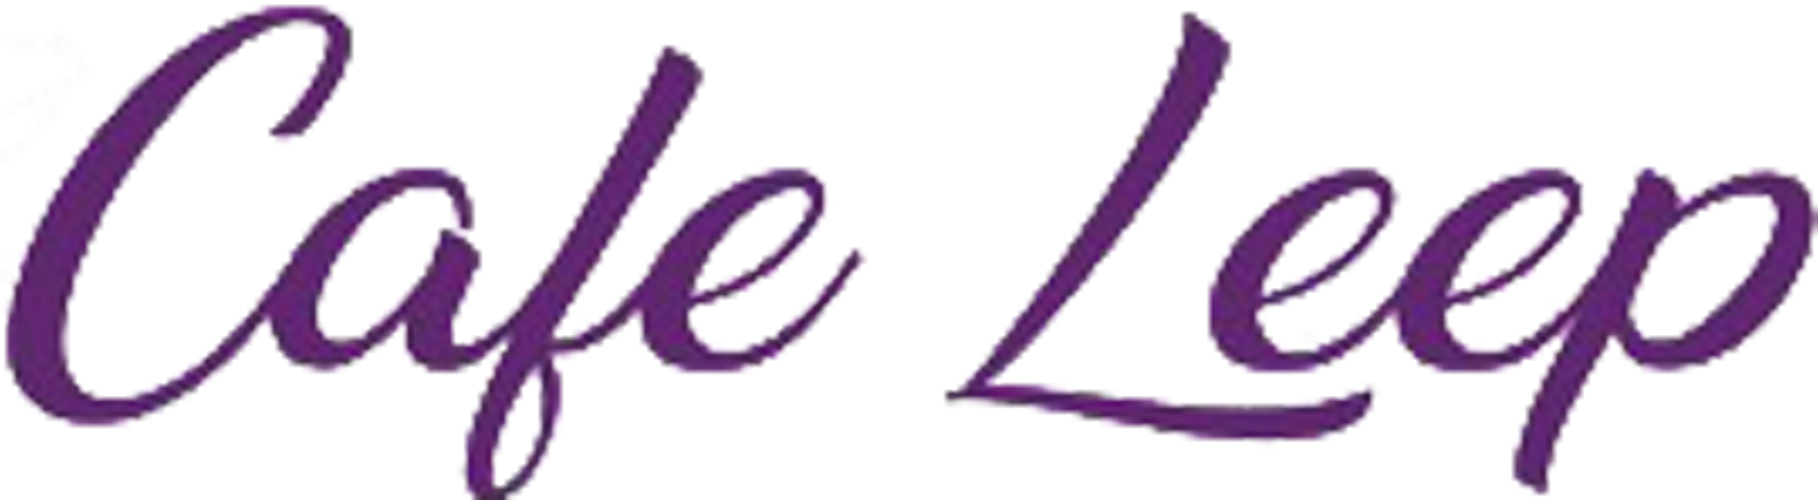 The Cafe Leep logo written in purple text